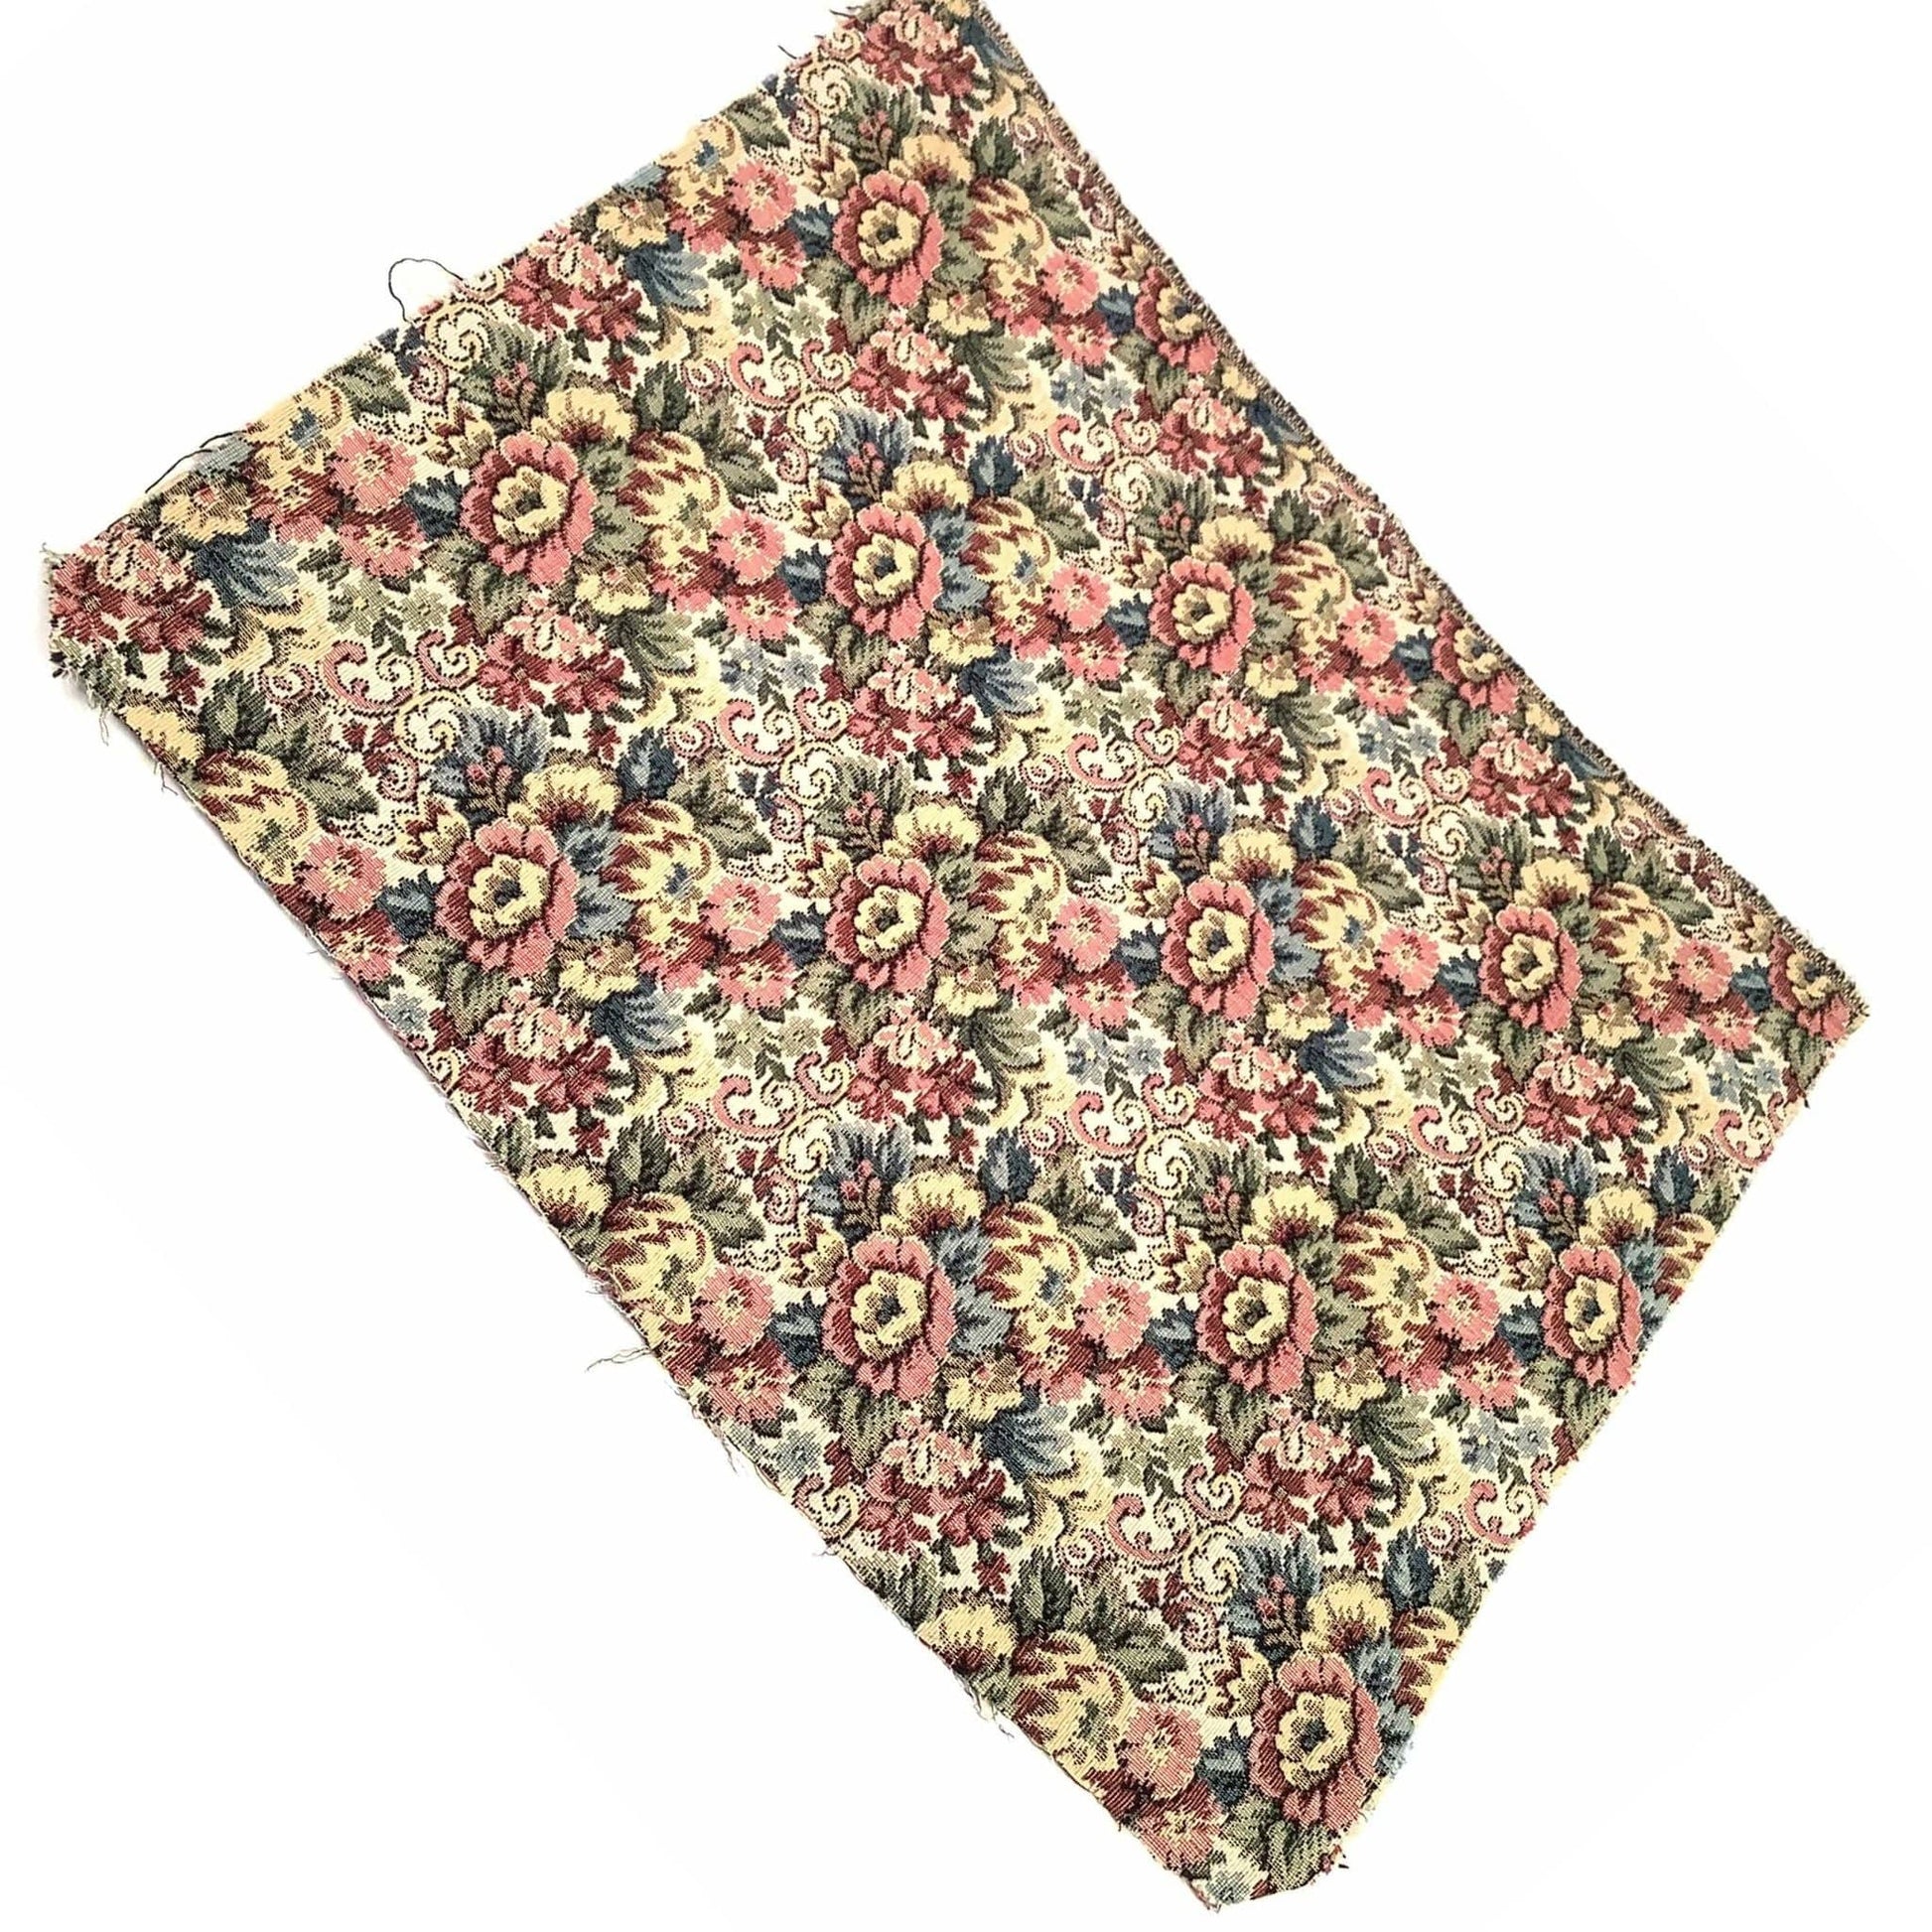 Vintage Floral Fabric Sample Multi / Cotton / Vintage 1980s